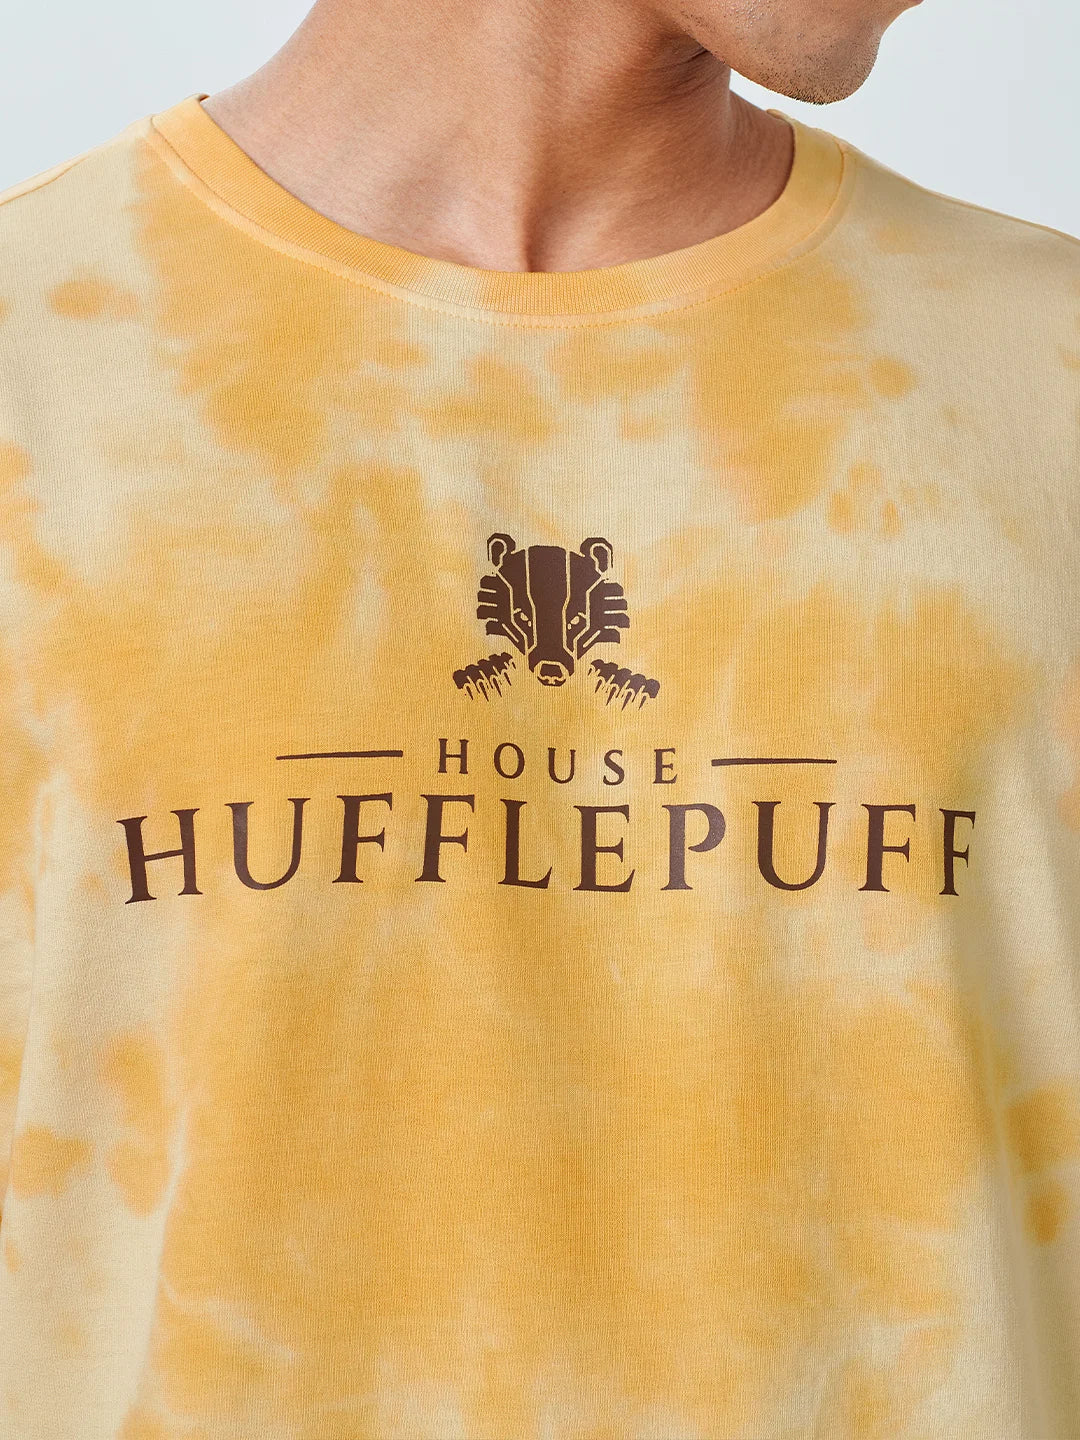 Harry Potter House Hufflepuff (Tie Dye) UK version